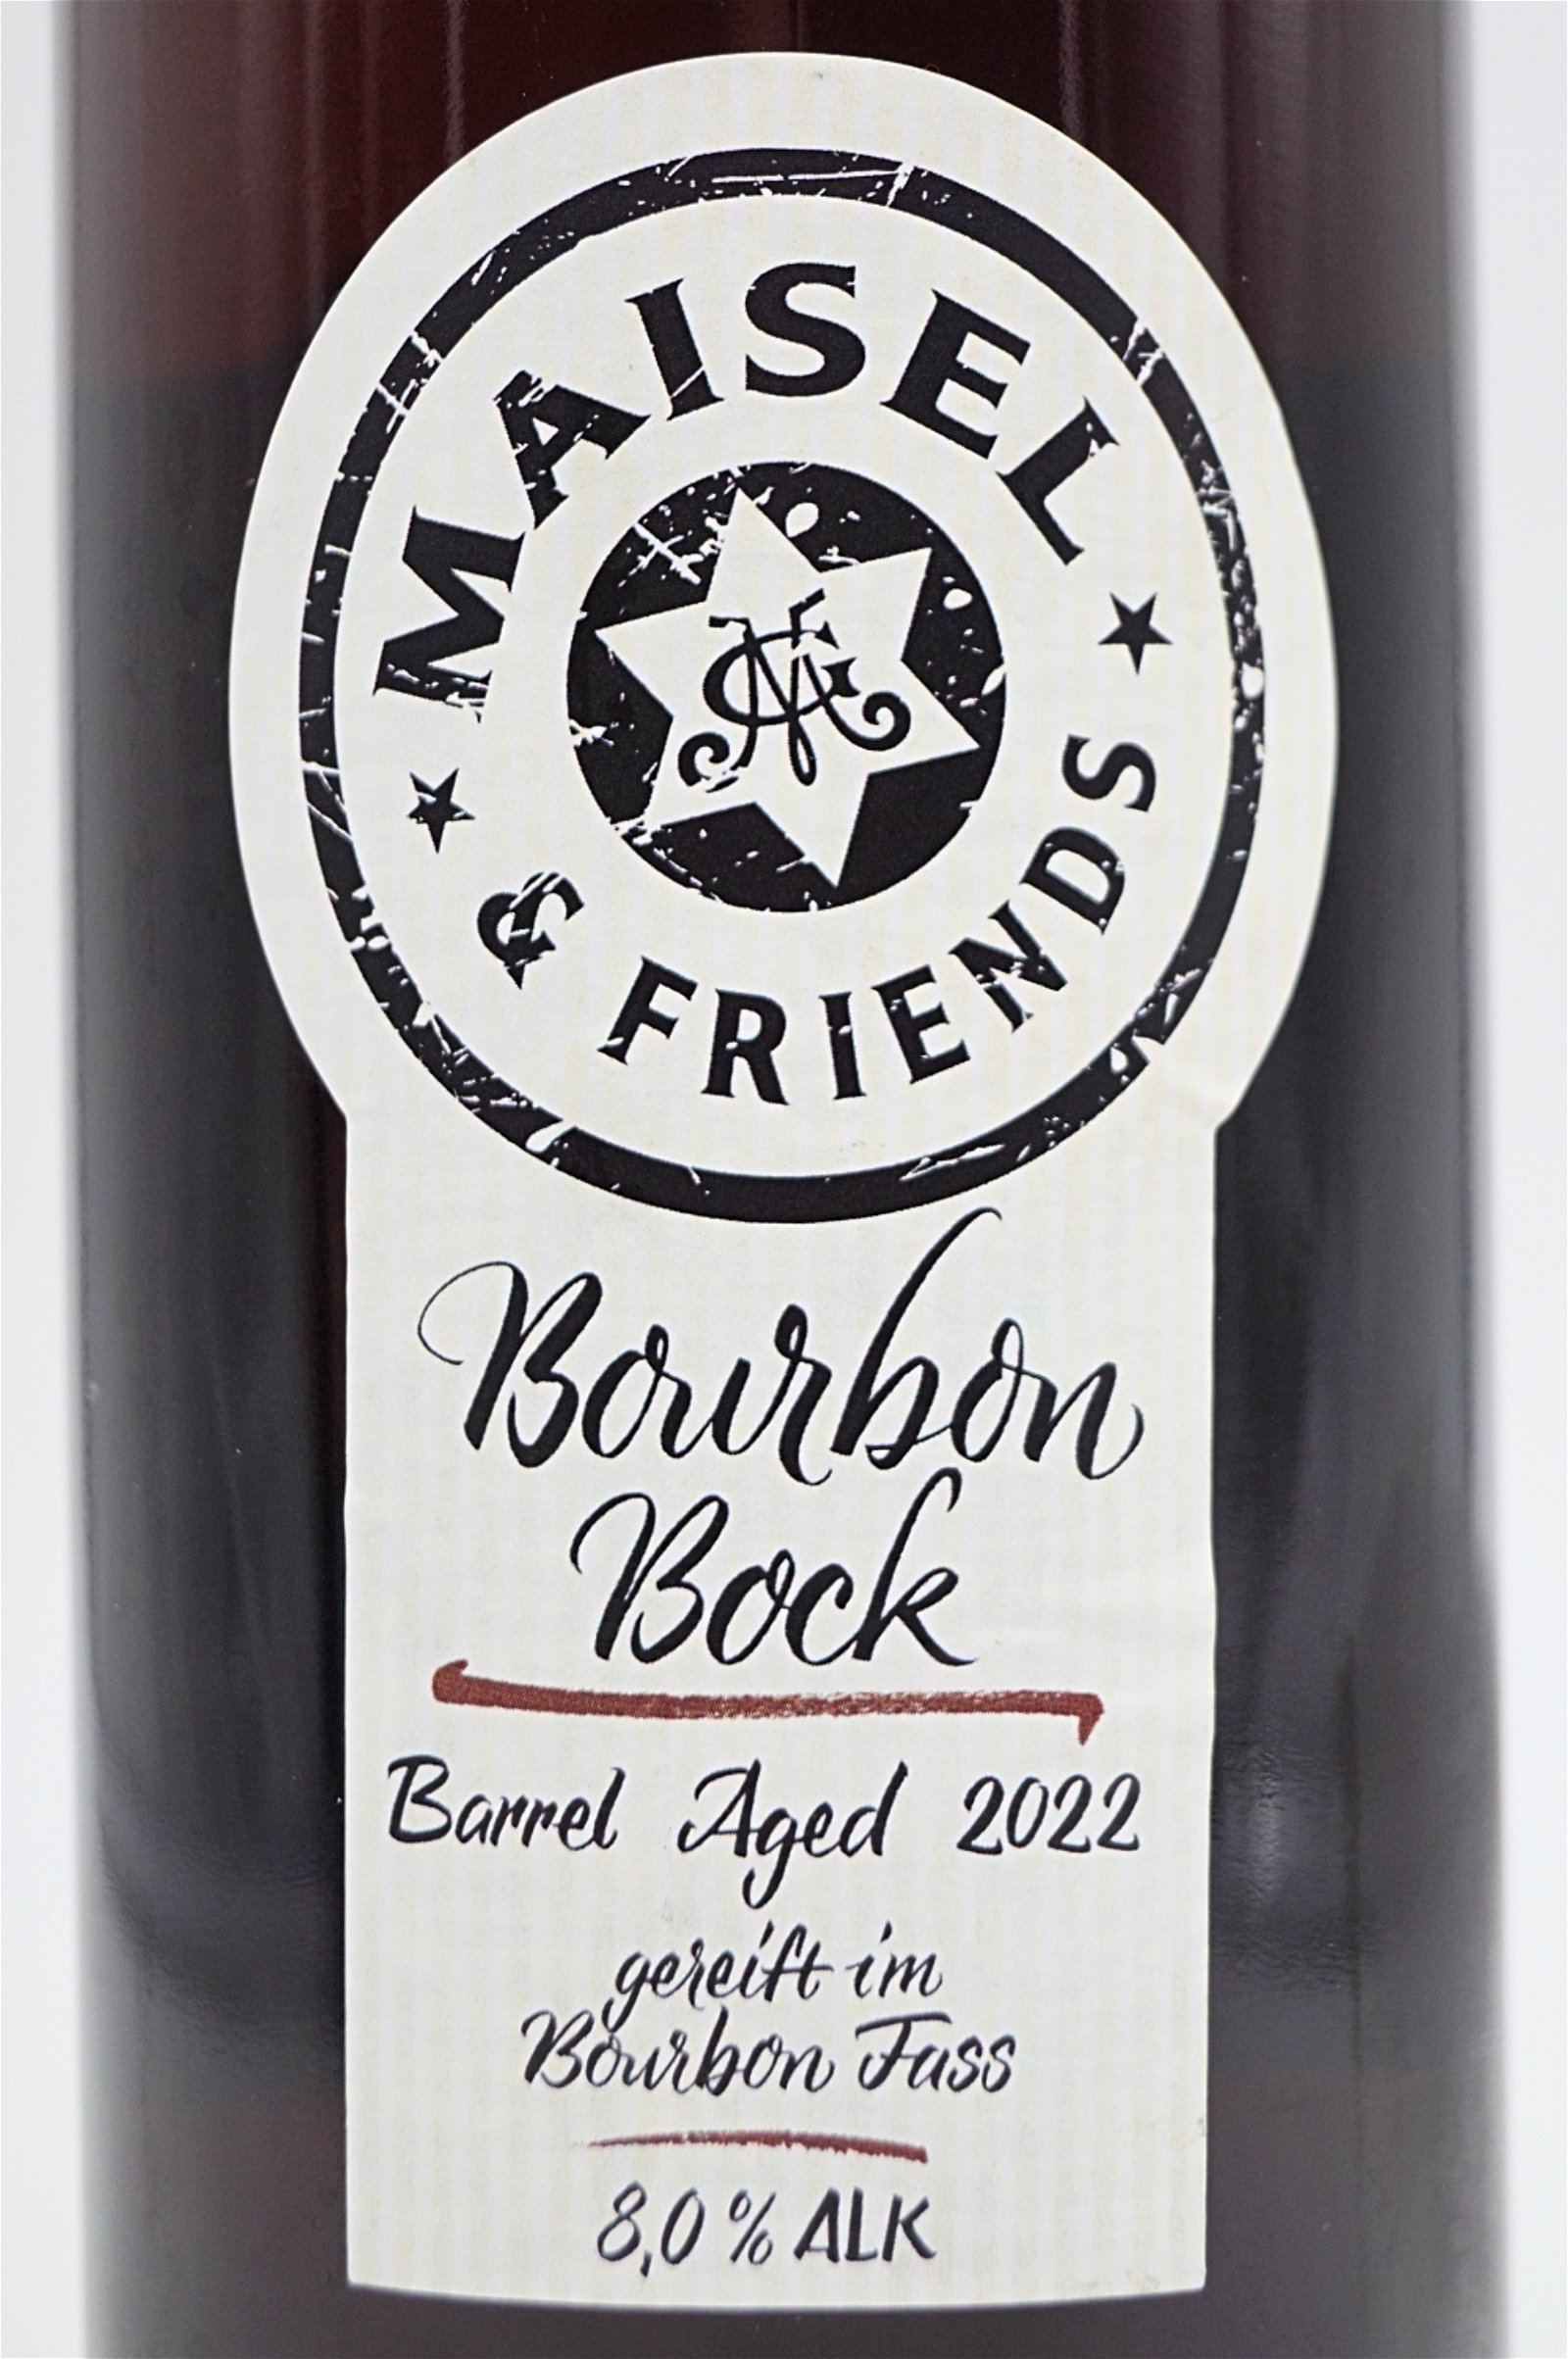 Maisel & Friends Bourbon Bock Barrel Aged 2022